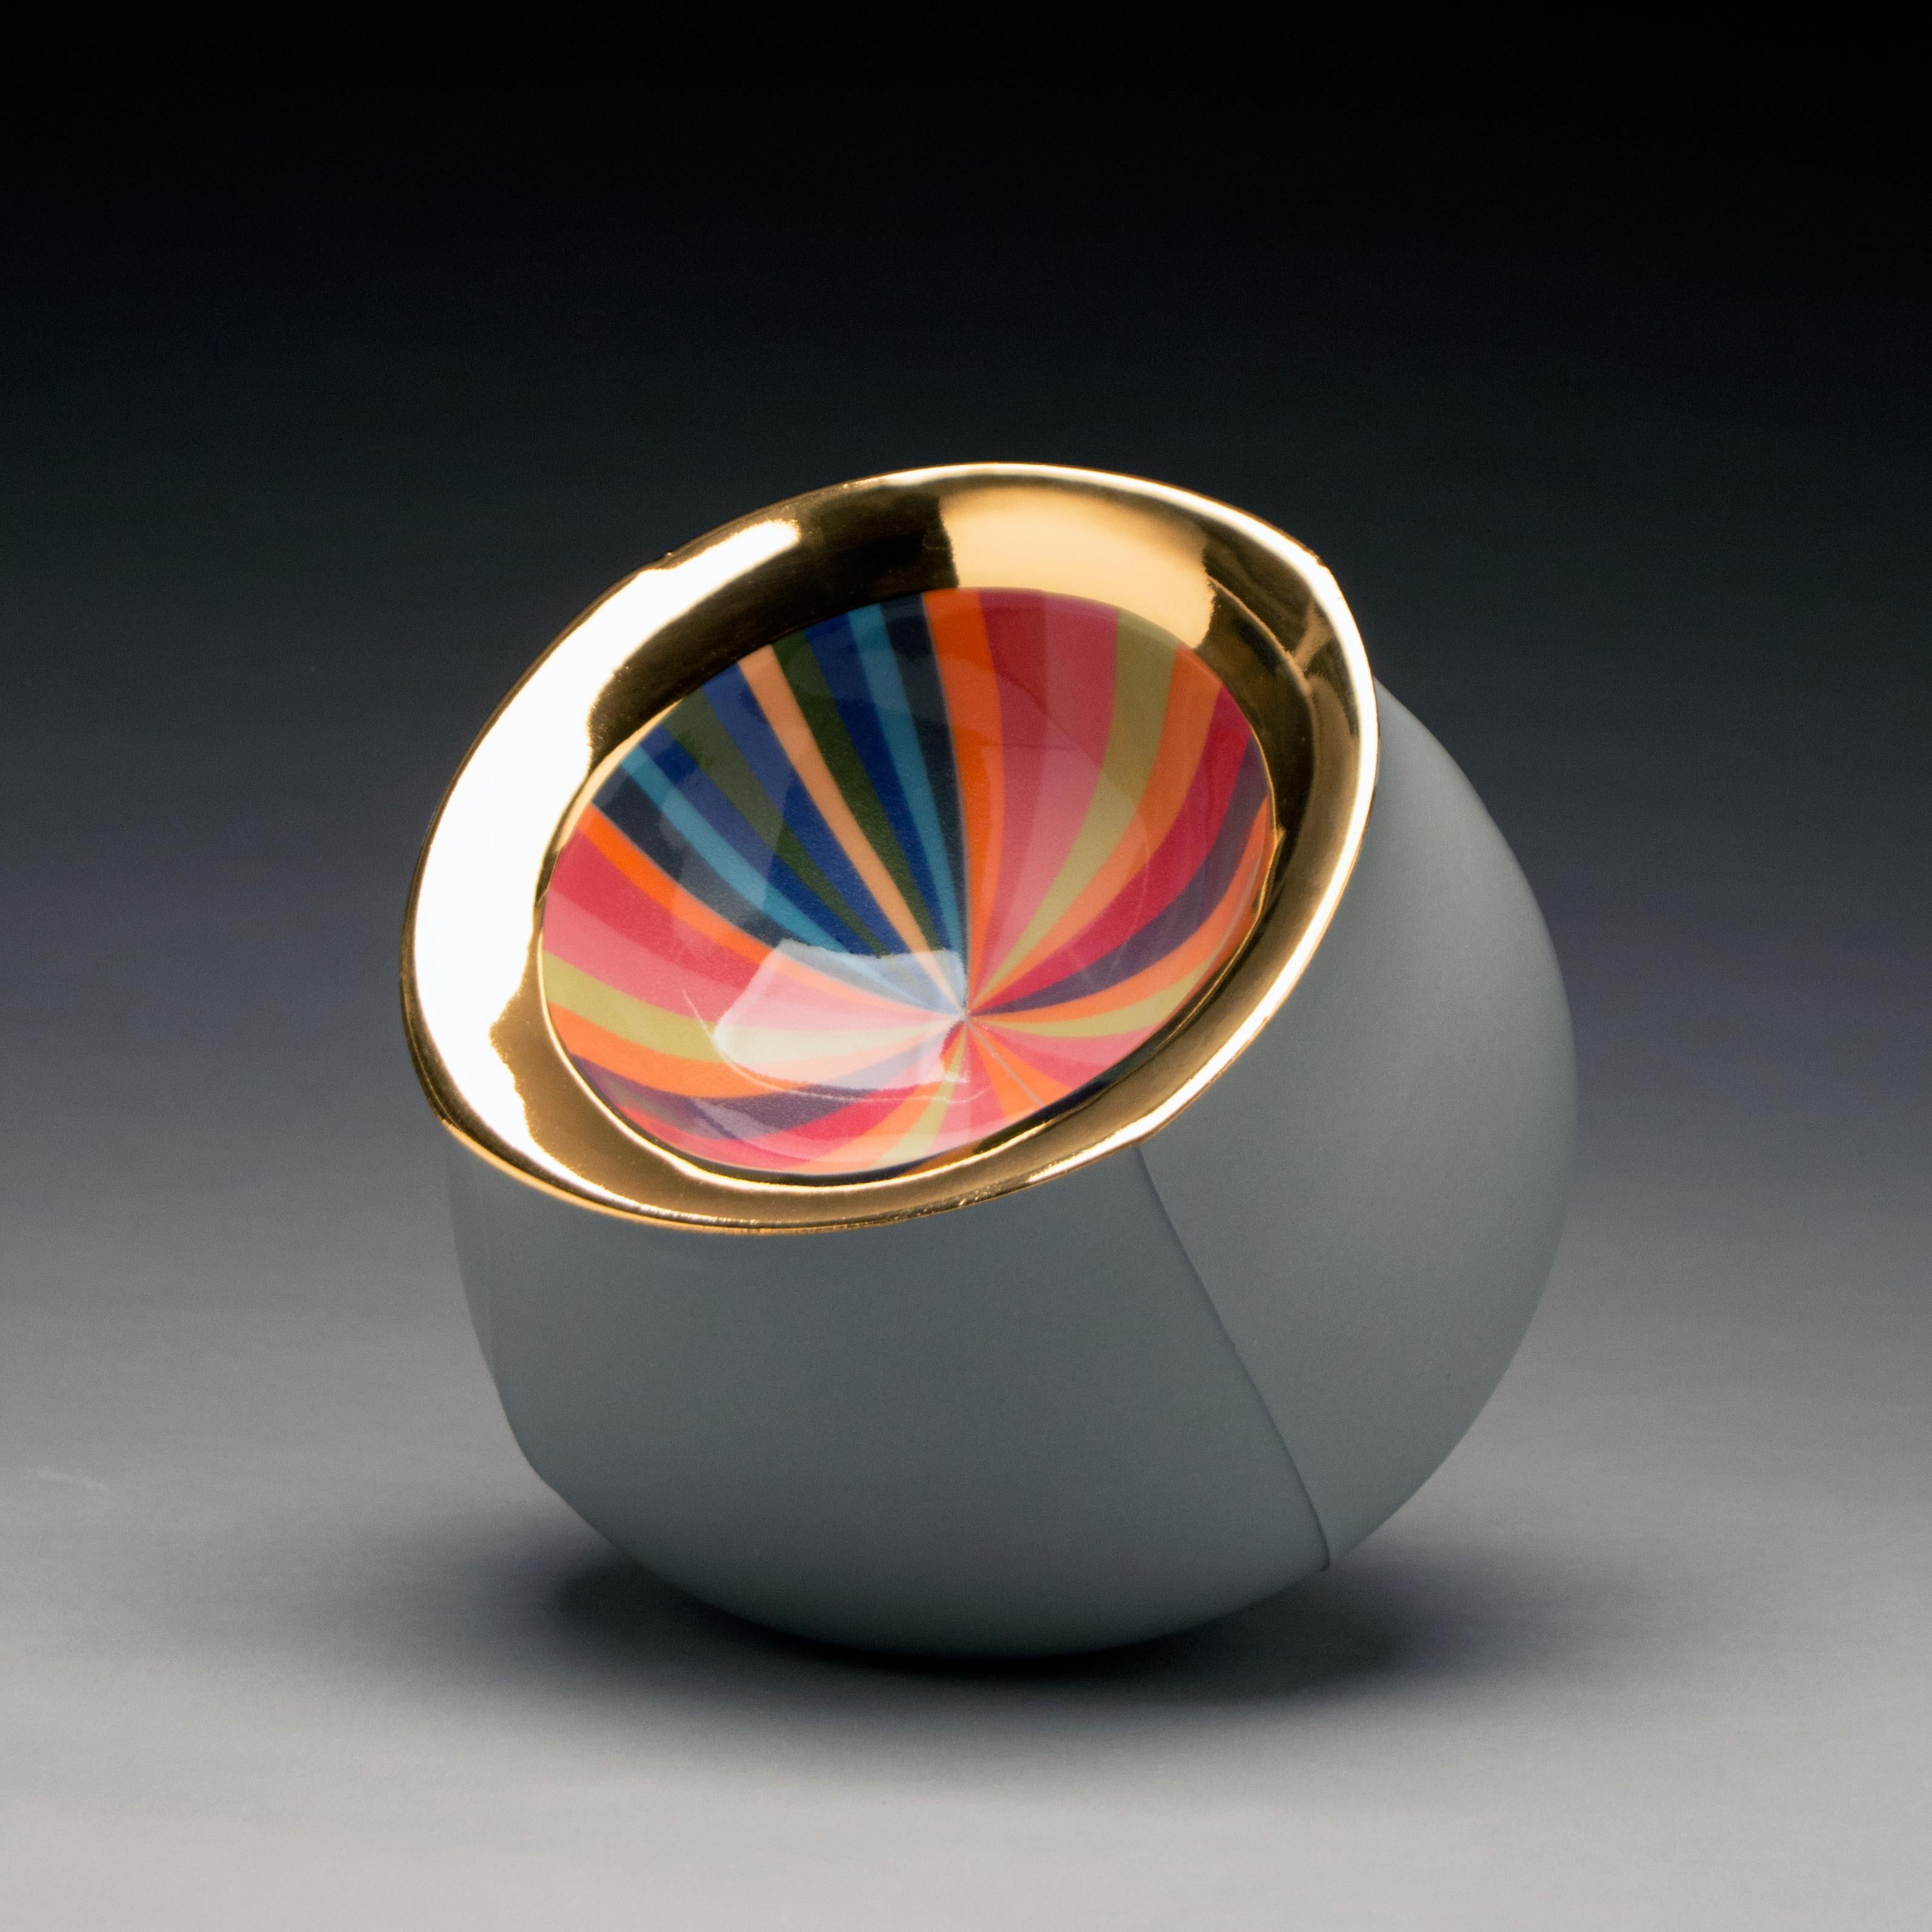 "Grey Bowl", Contemporary, Ceramic, Sculpture, Glaze, Pattern, Gold Luster